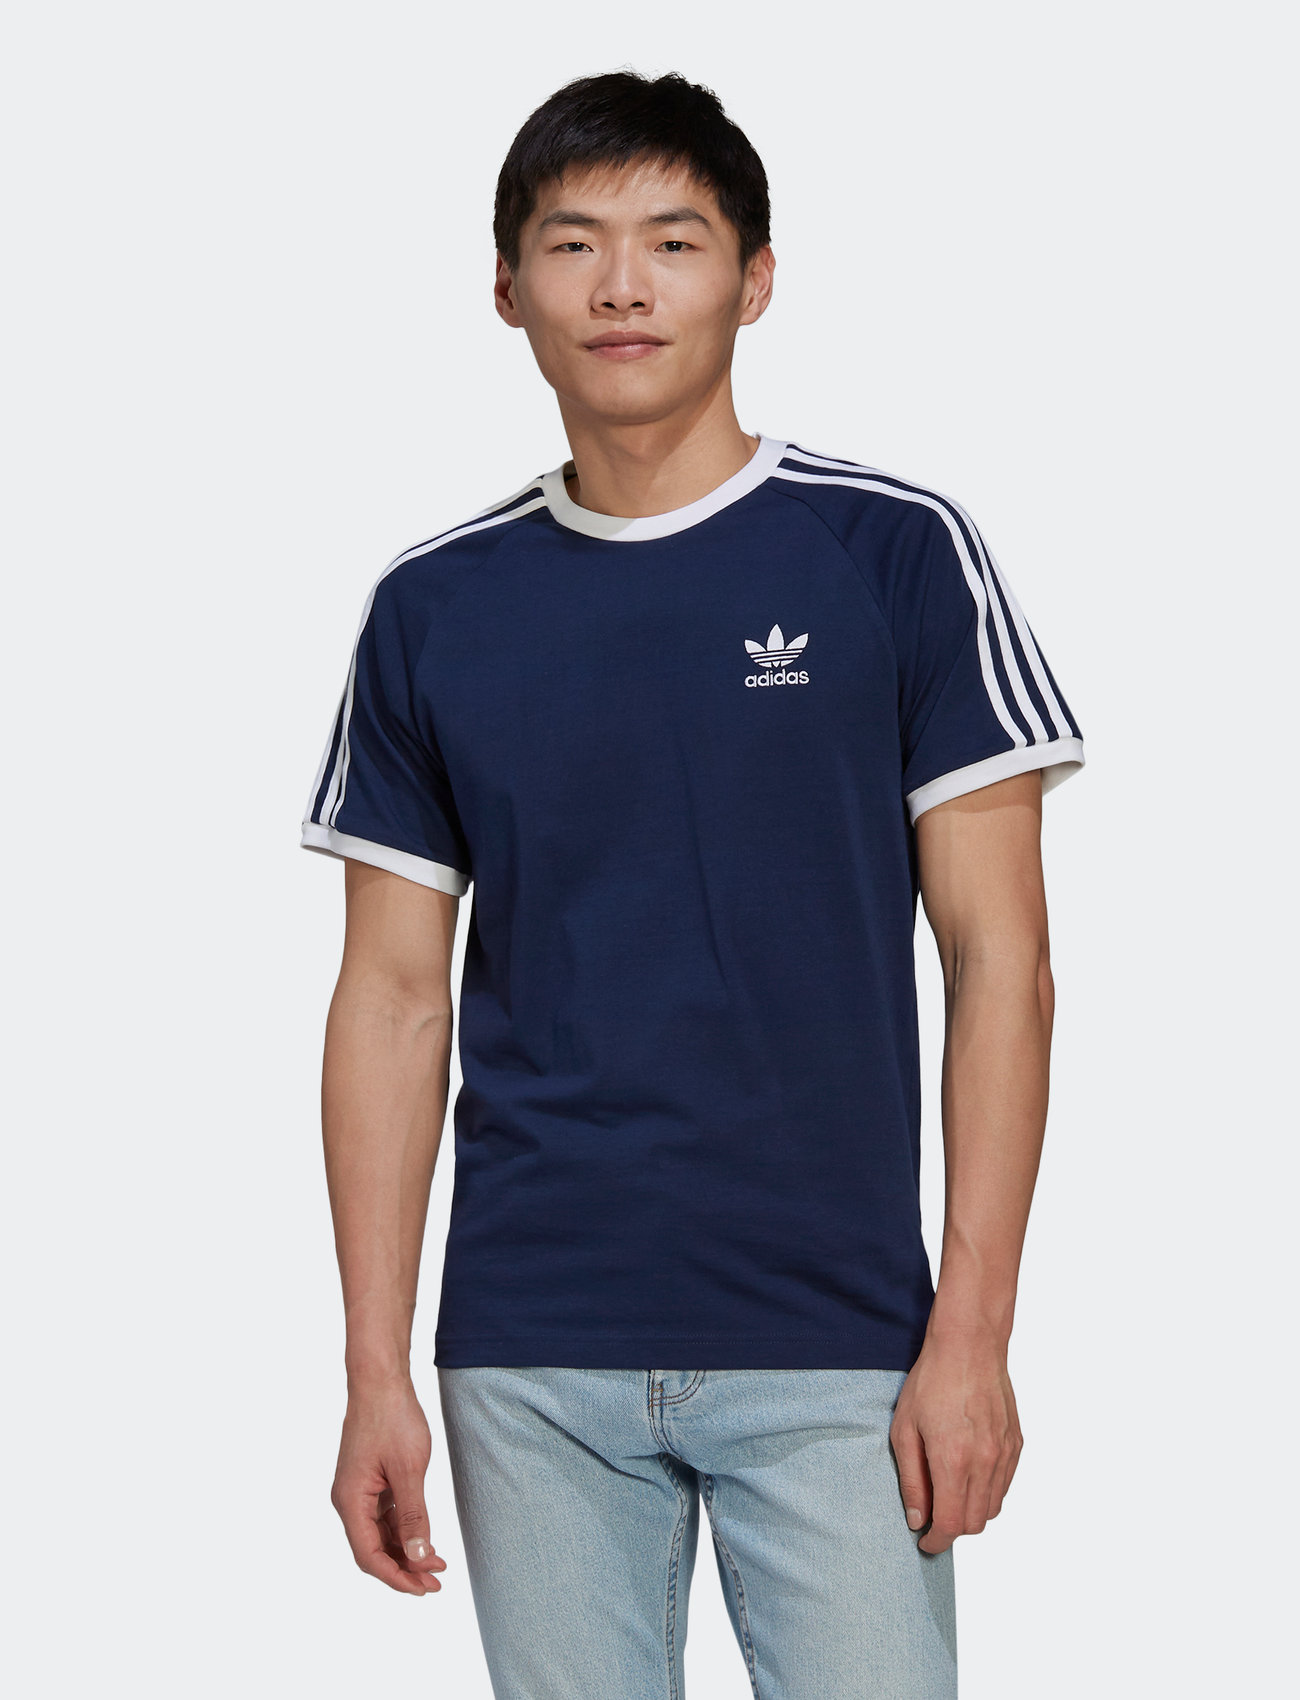 Adicolor Classics 3-Stripes T-Shirt | vlr.eng.br